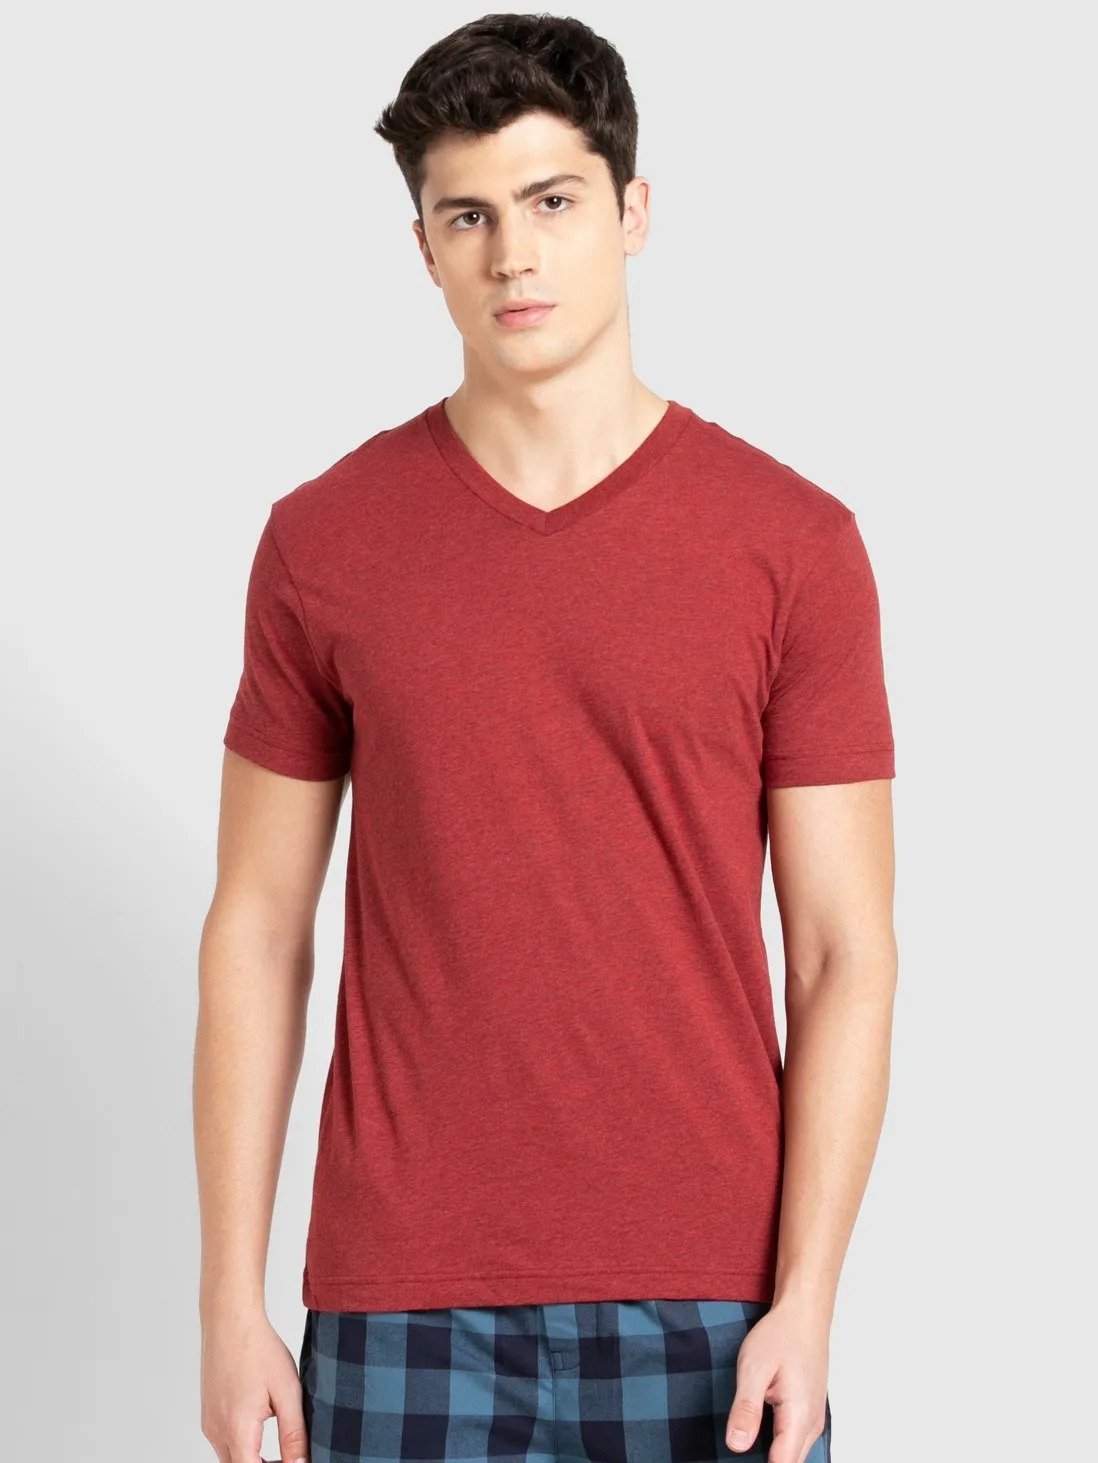 Men's Red Melange V-Neck T-shirt